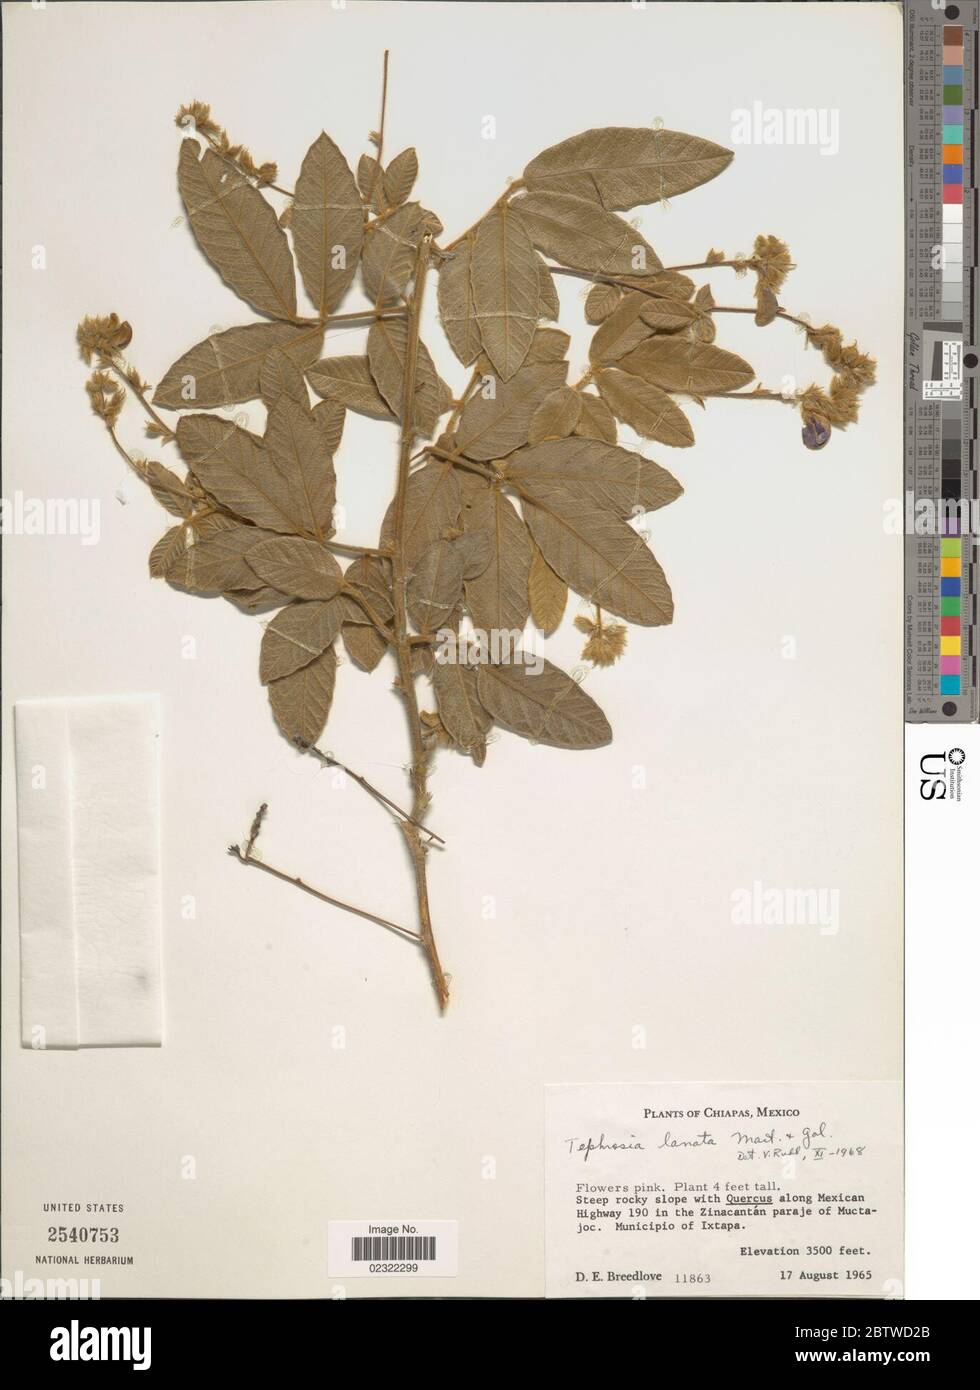 Tephrosia lanata M Martens Galeotti. Stock Photo